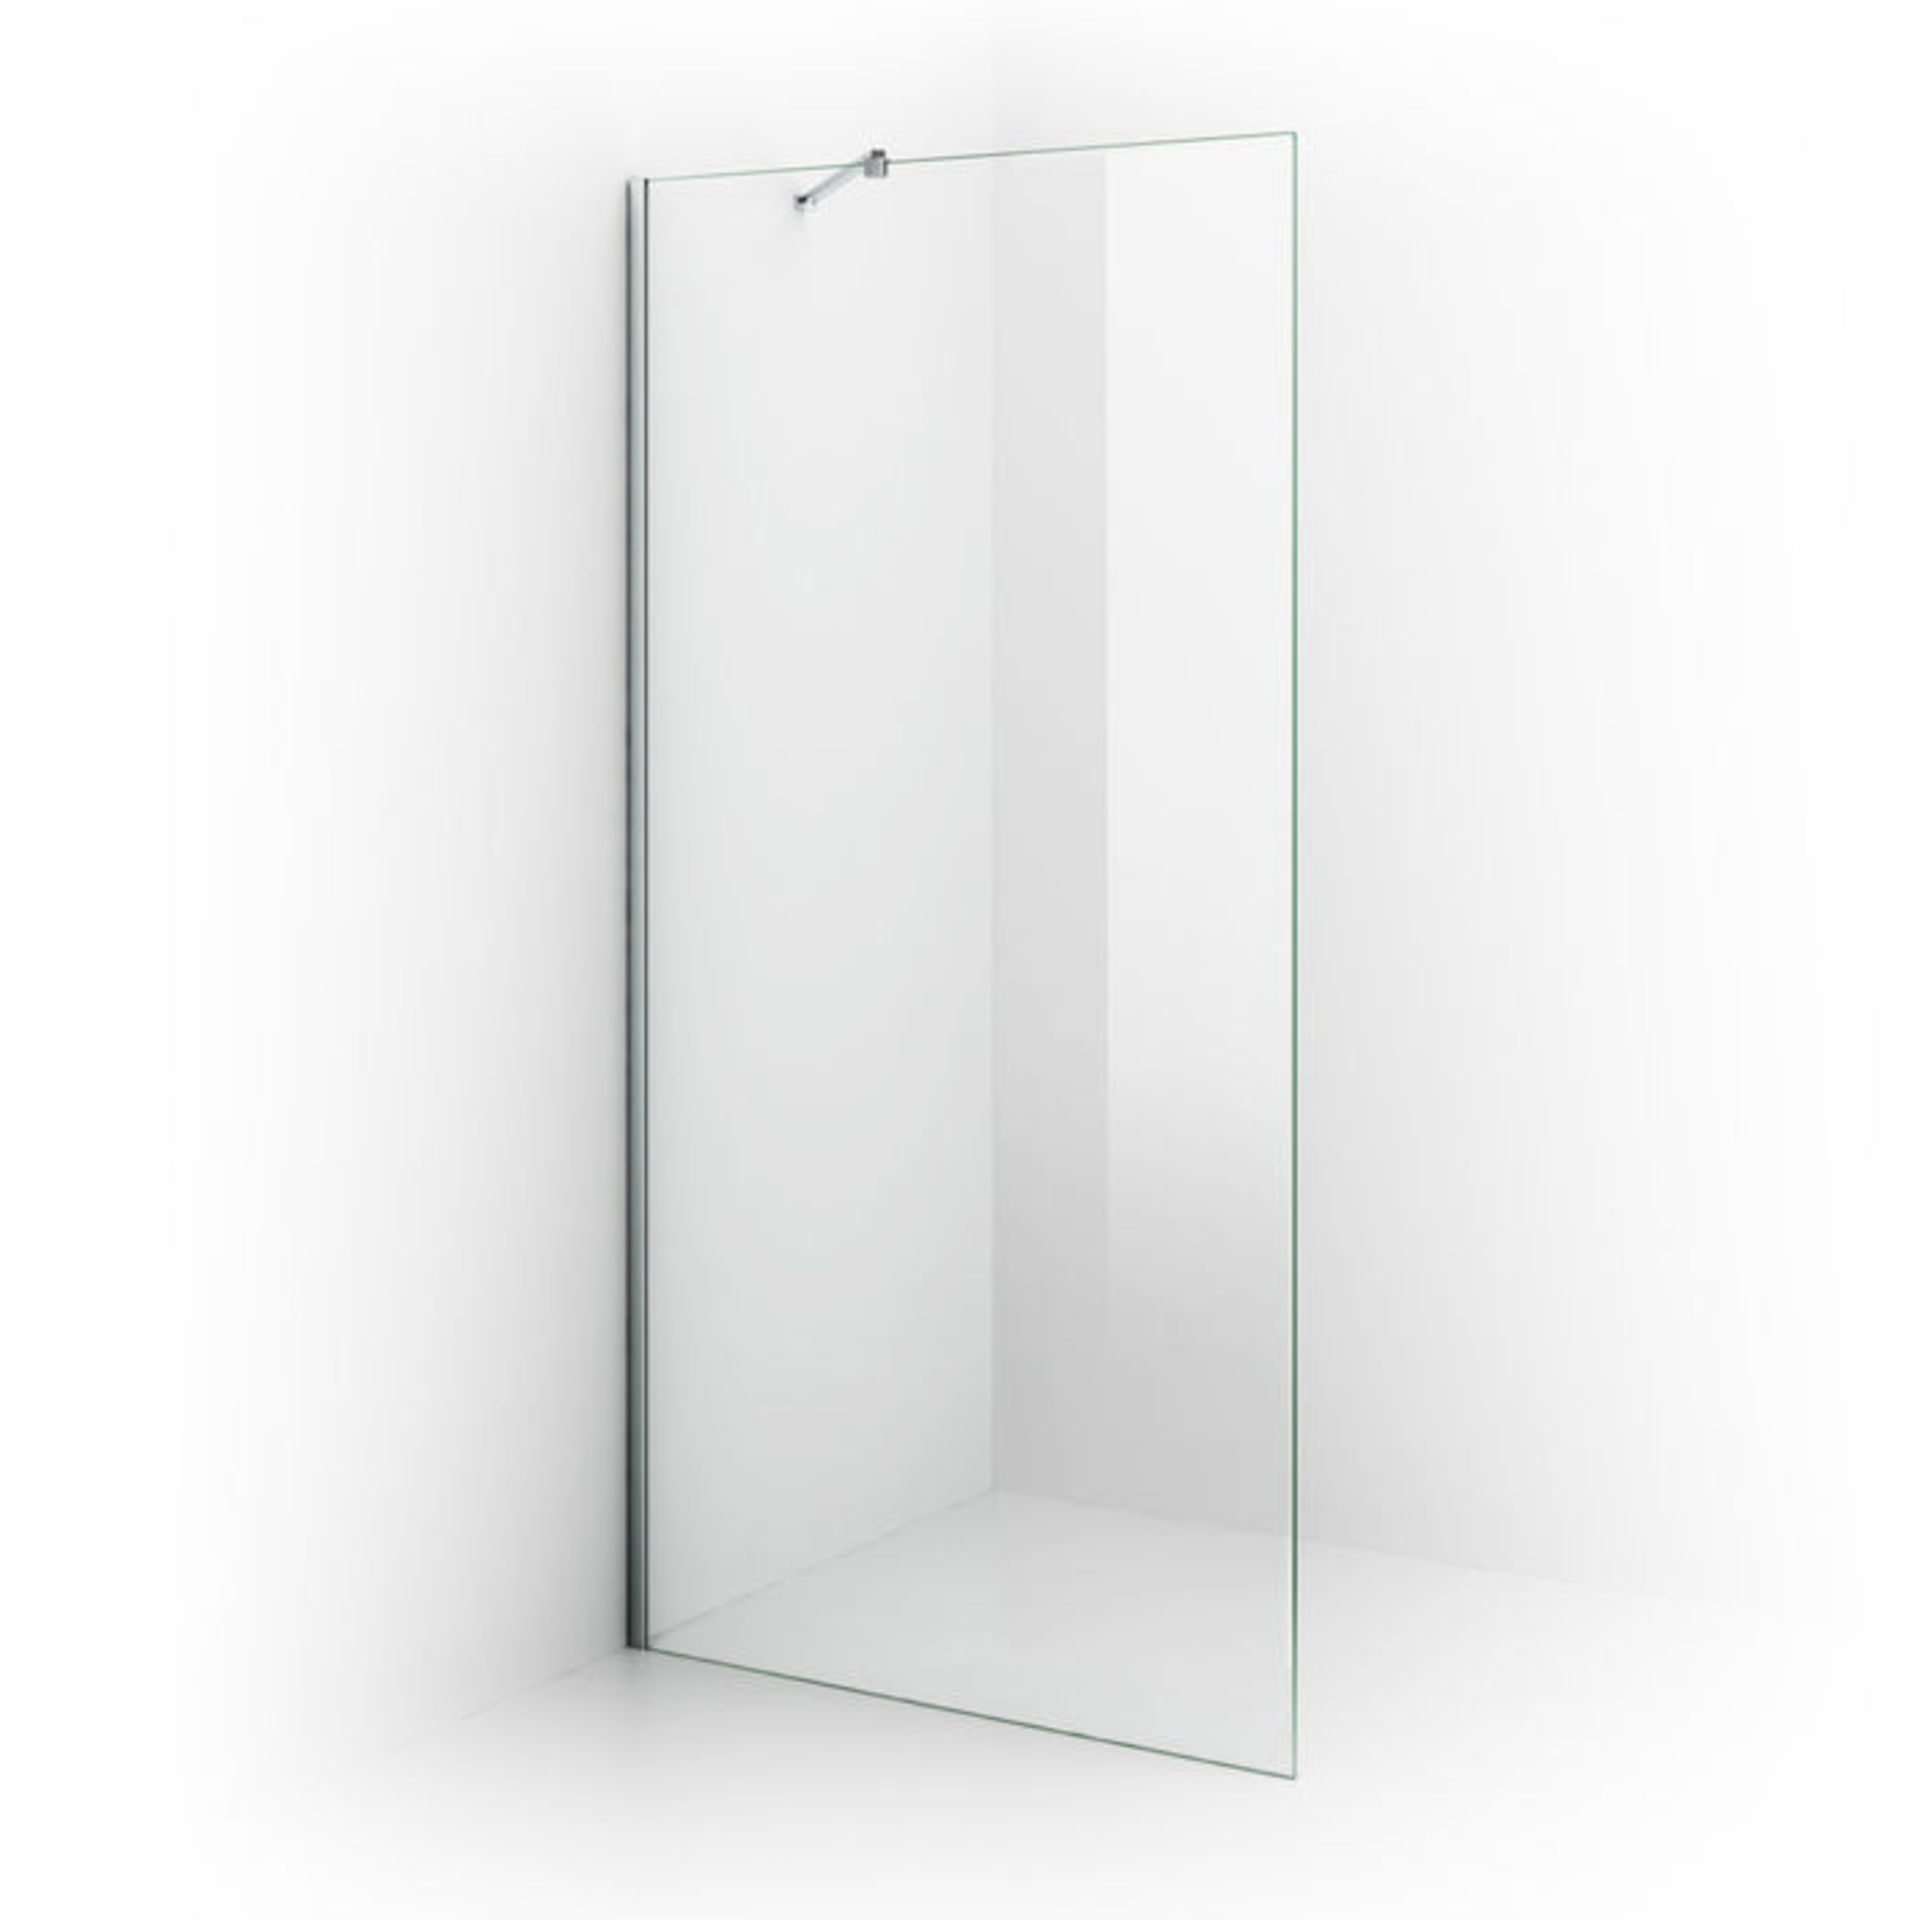 (AL172) 1000mm - 8mm - Premium EasyClean Wetroom Panel. RRP £399.99. 8mm EasyClean glass - Our glass - Image 4 of 5